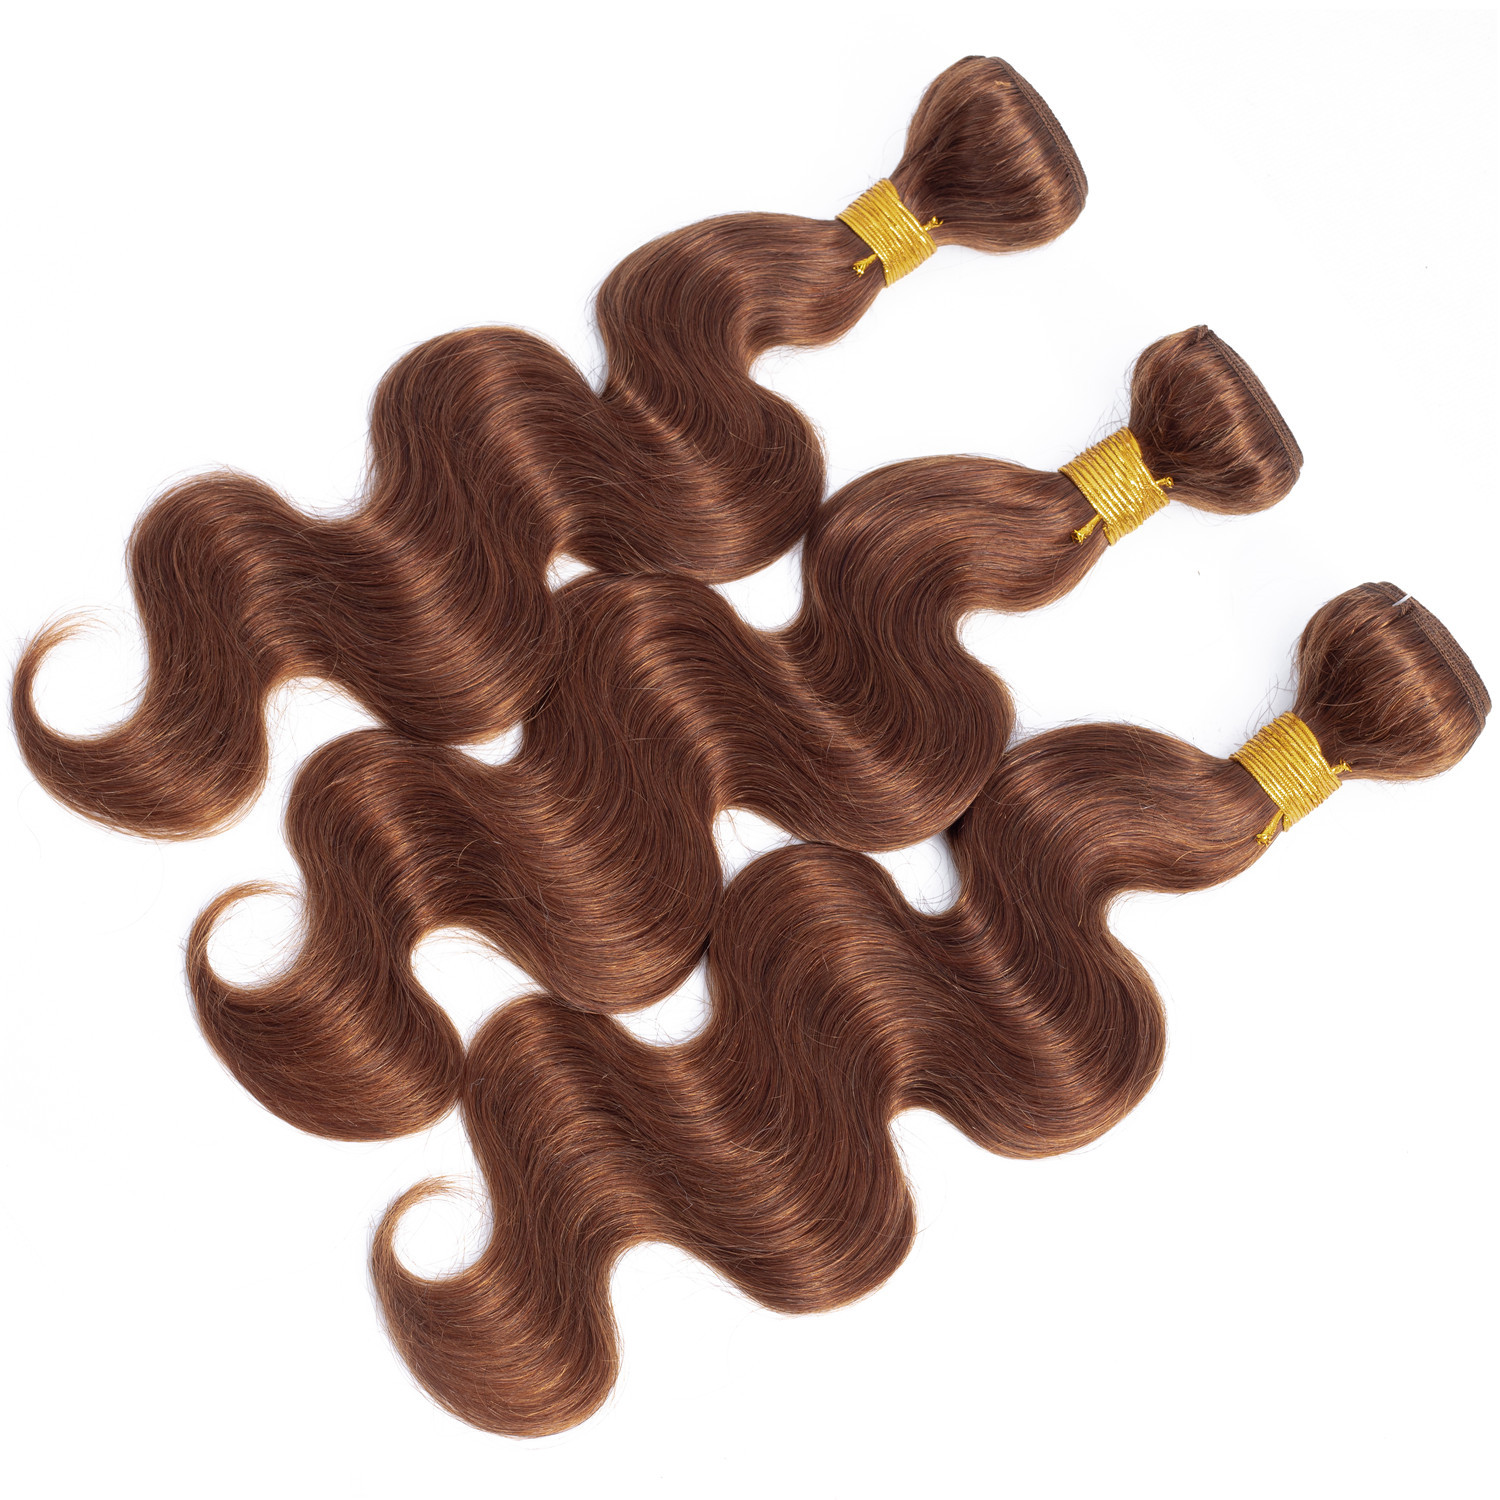 Wigsbuy Human Hair Weave Light Brown #4 Body Wave 3 Bundle Deals